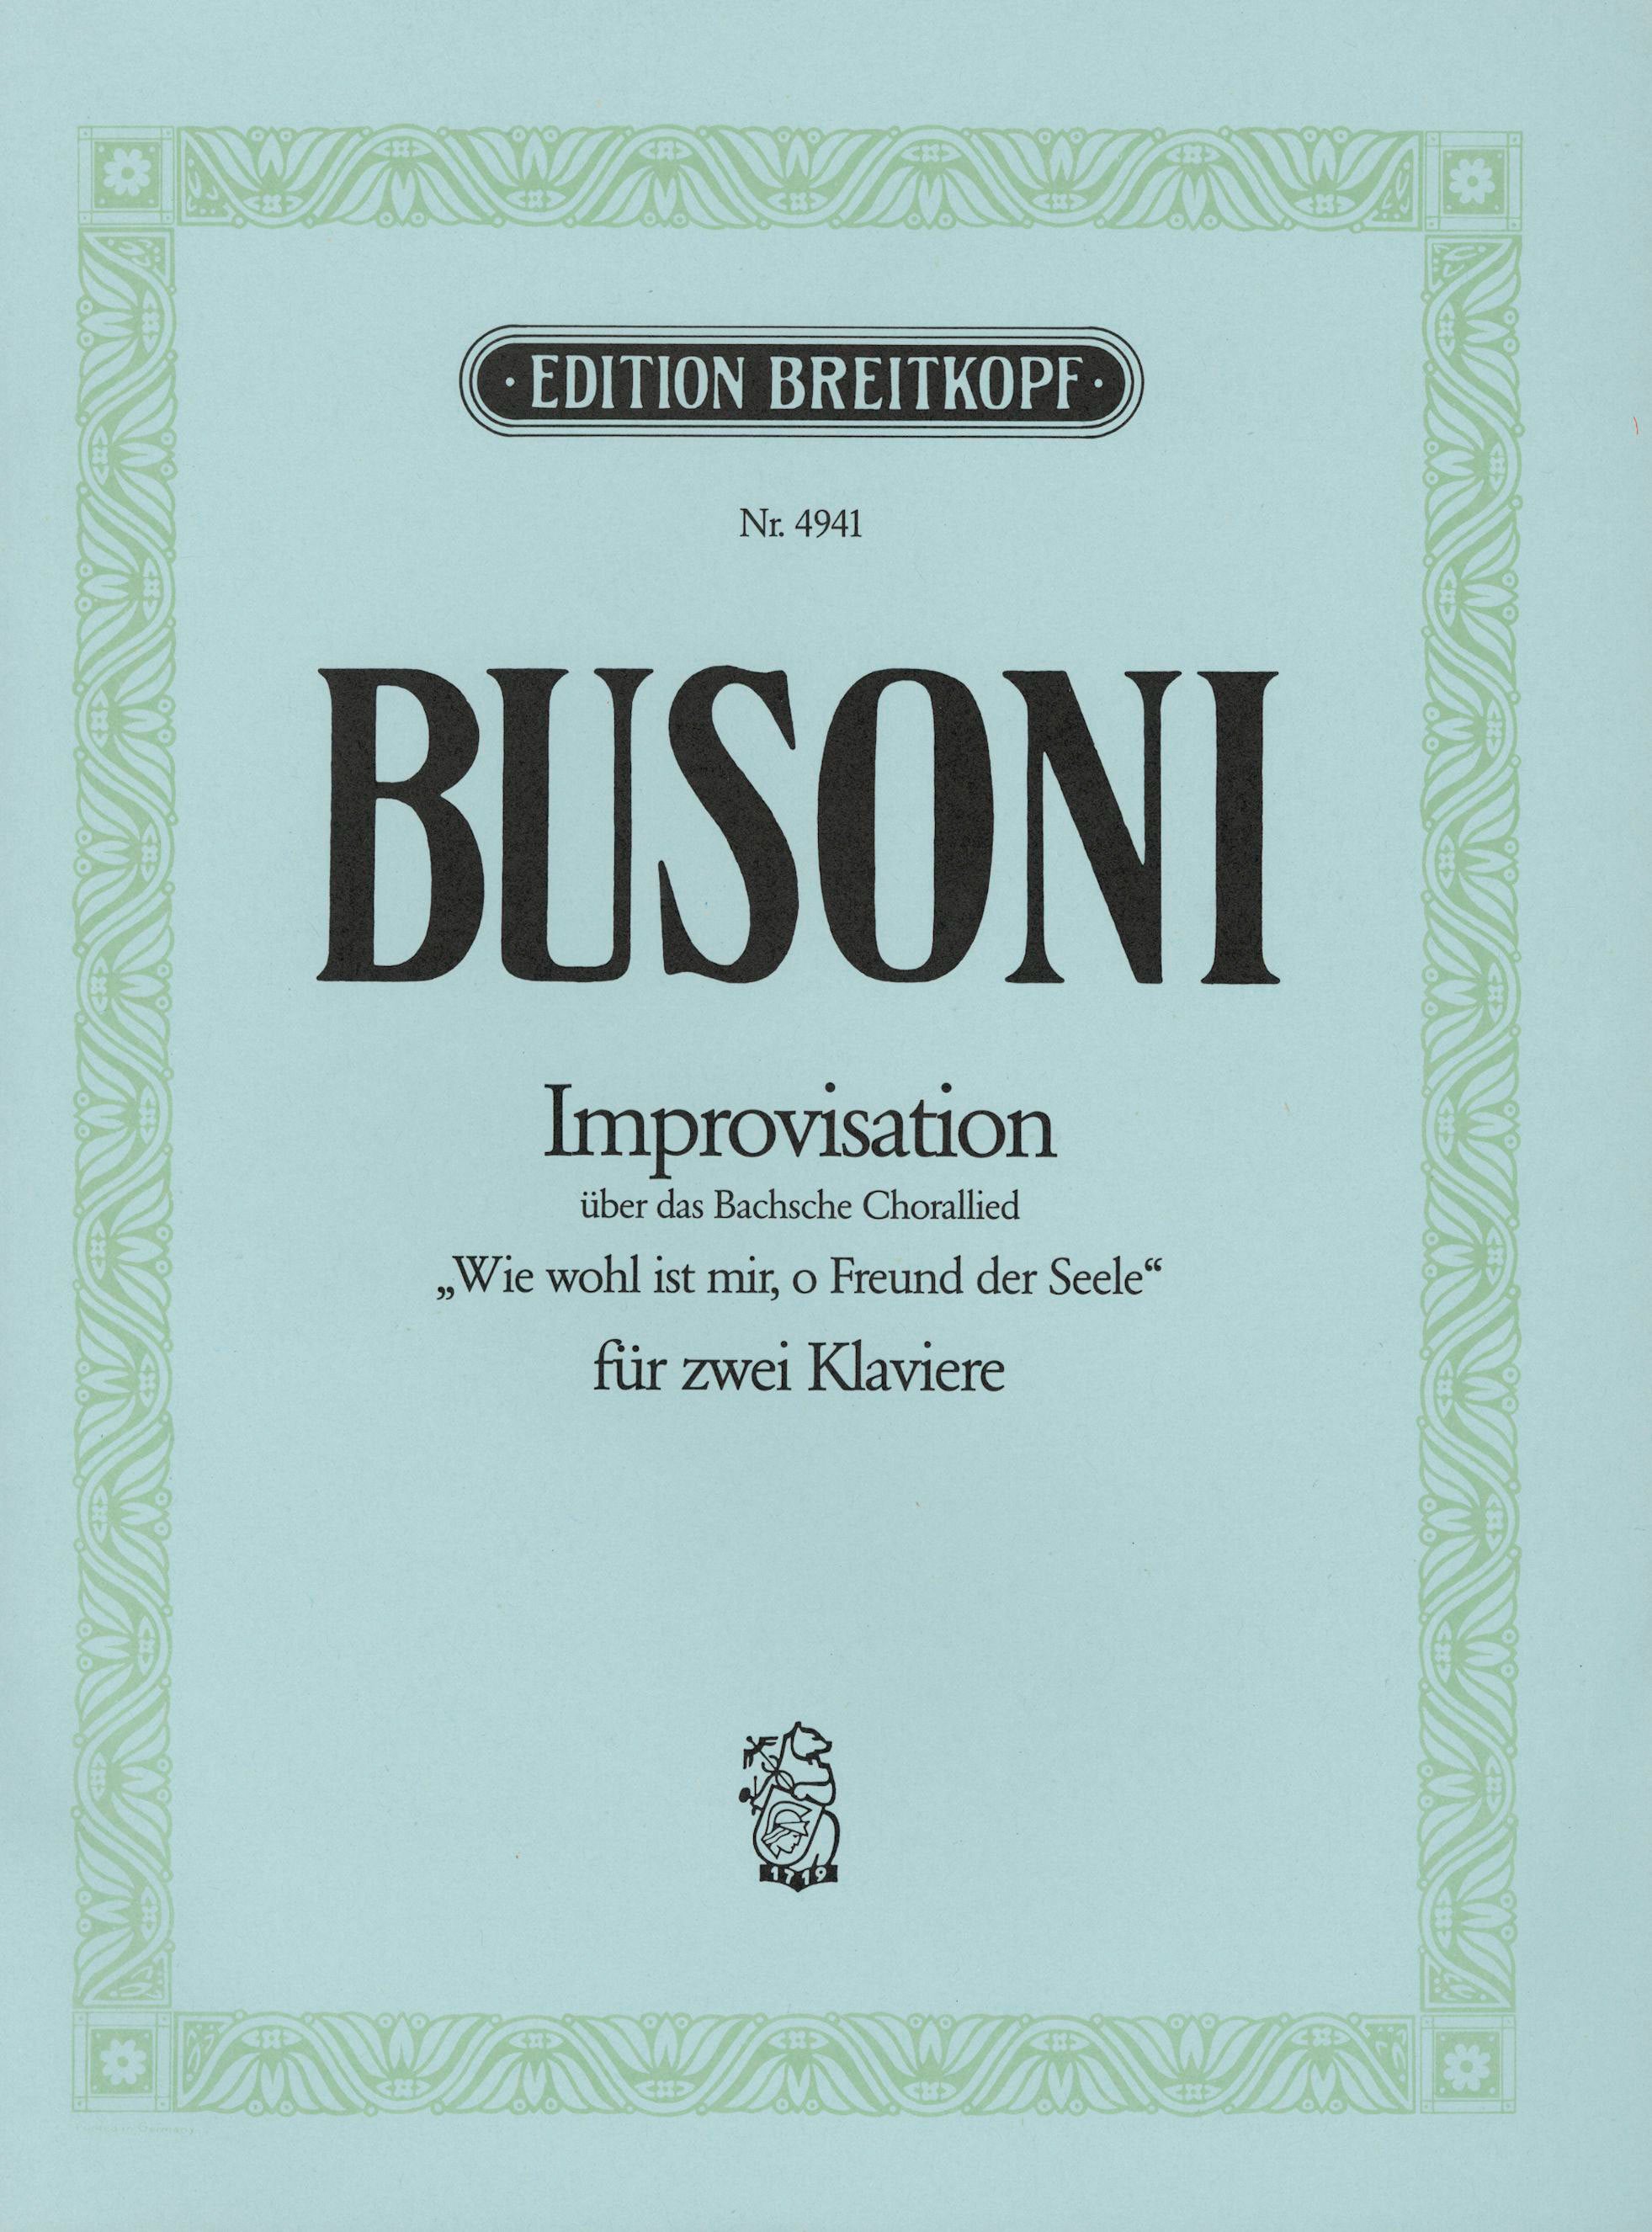 Busoni: Improvisation on the Bach chorale "Wie wohl ist mir", BV 271